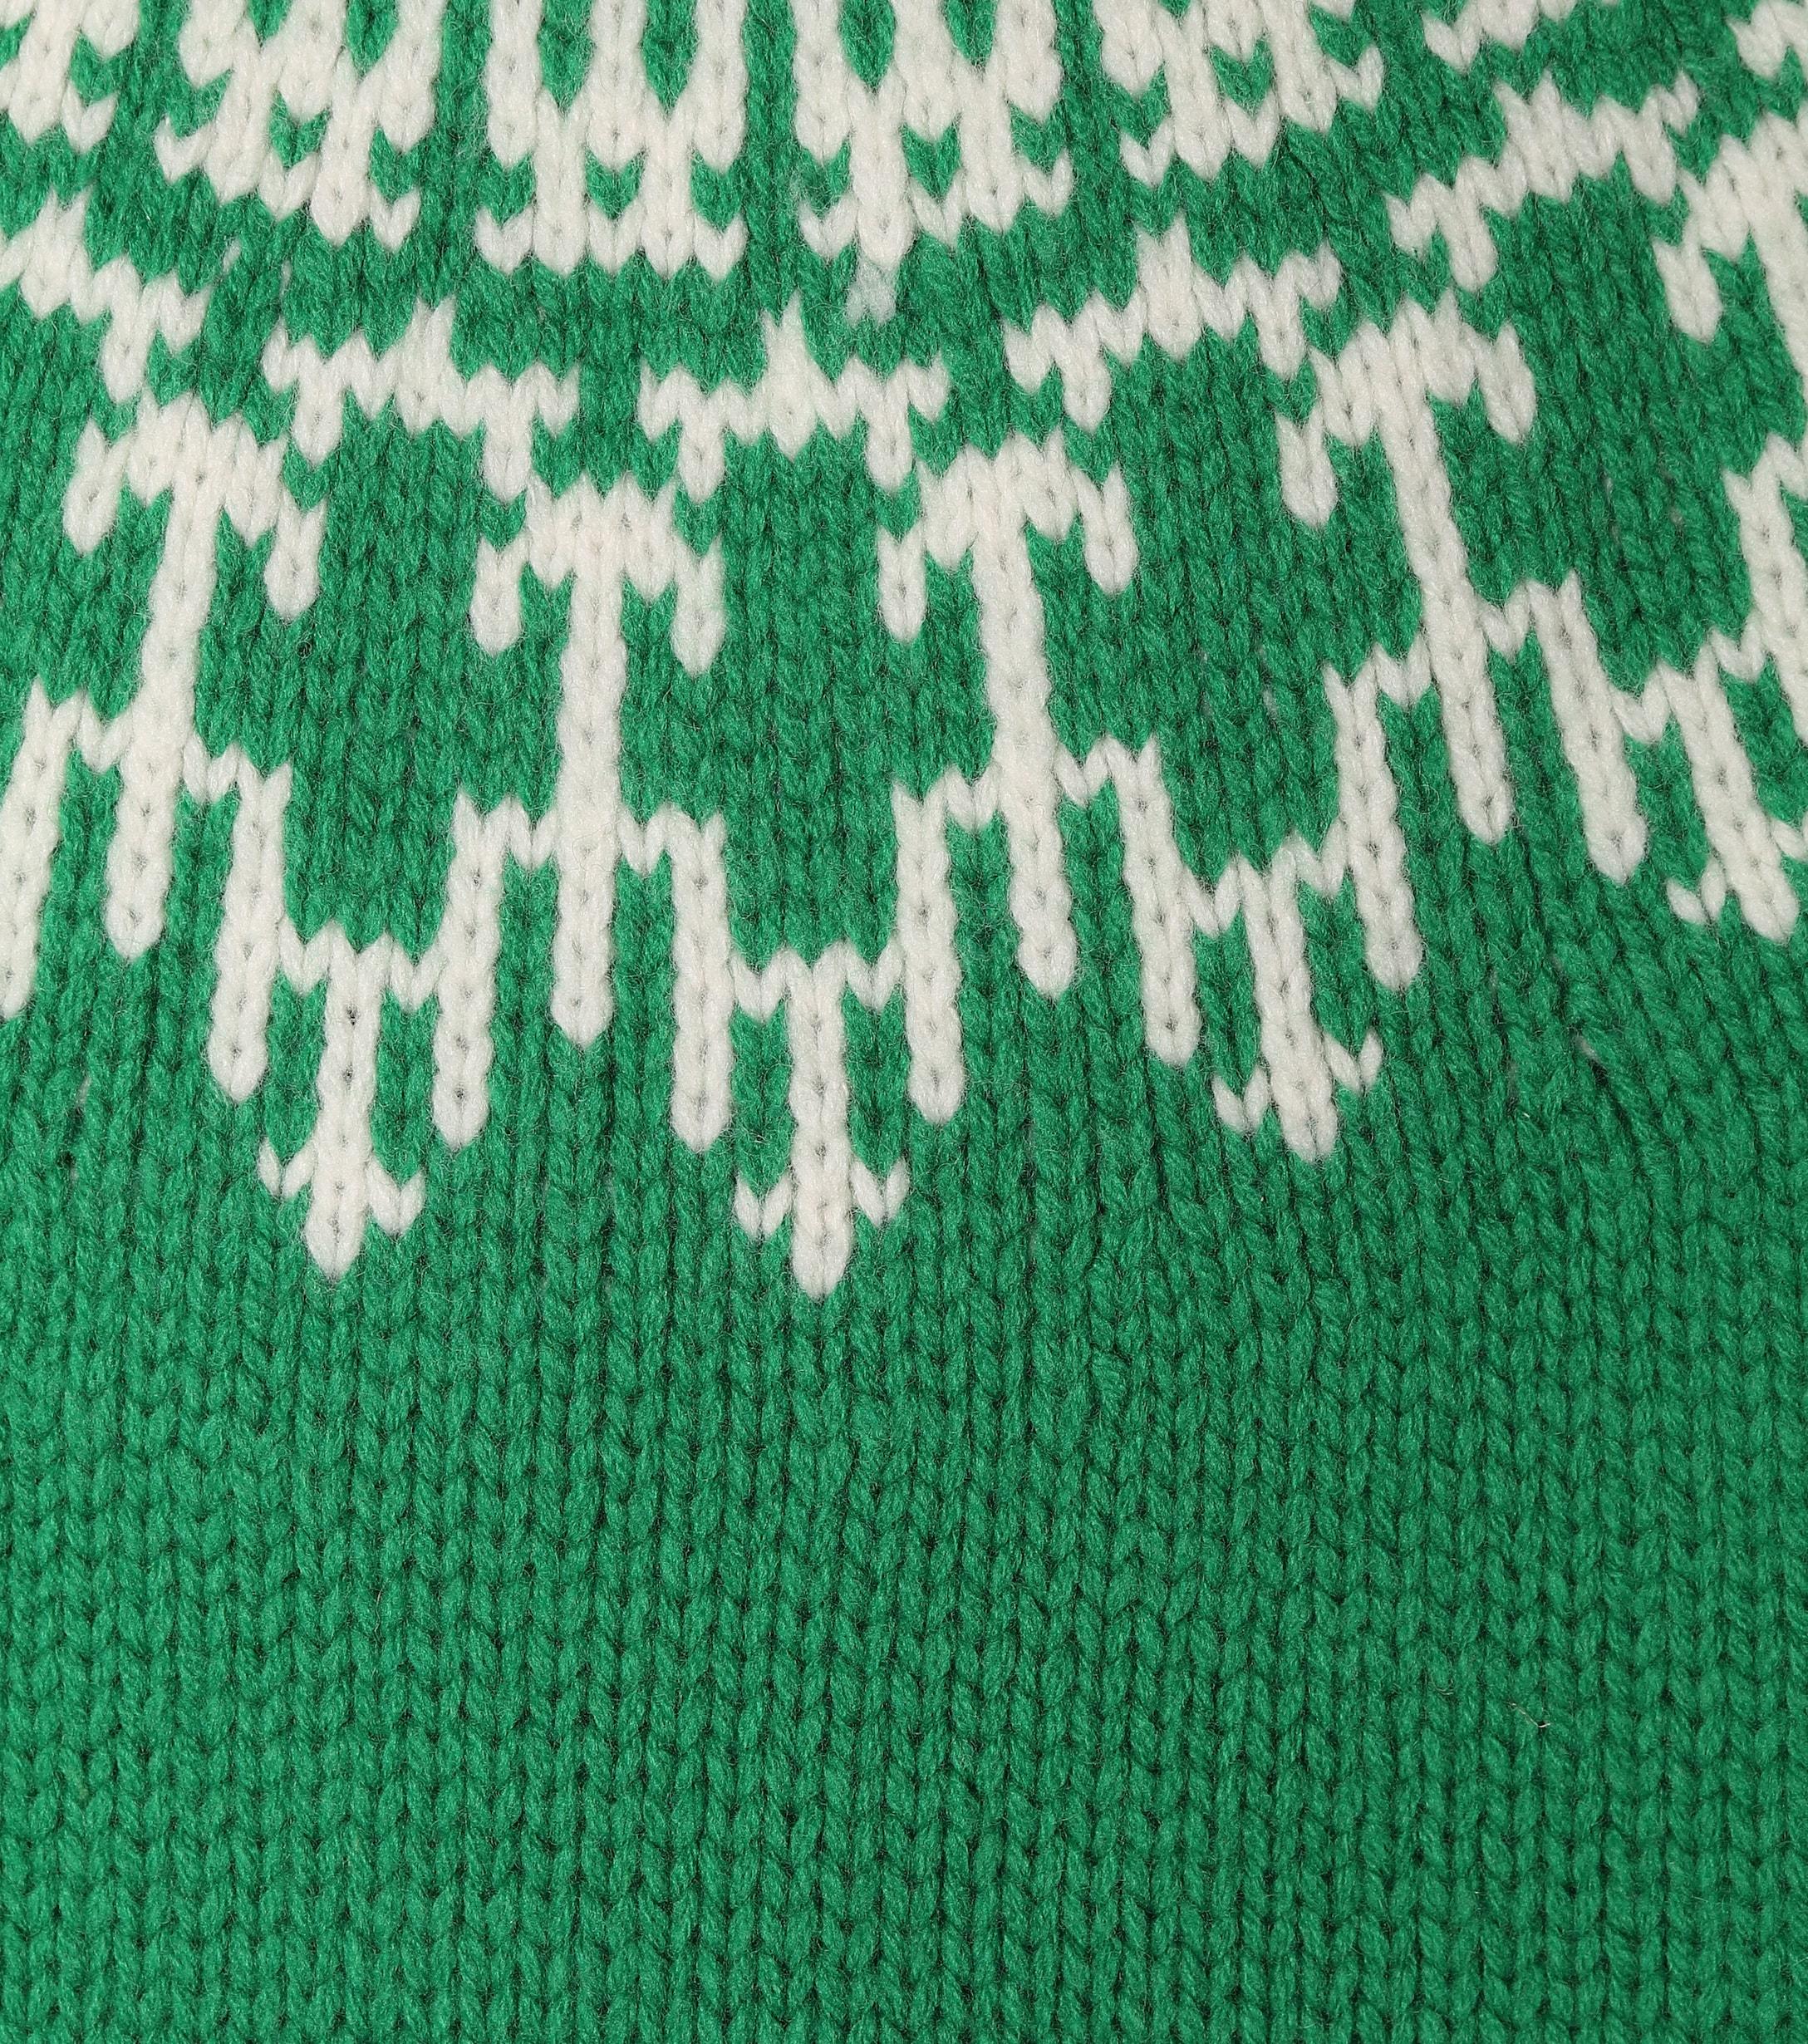 Tory Sport Wool Merino Fair Isle Sweater in Green | Lyst